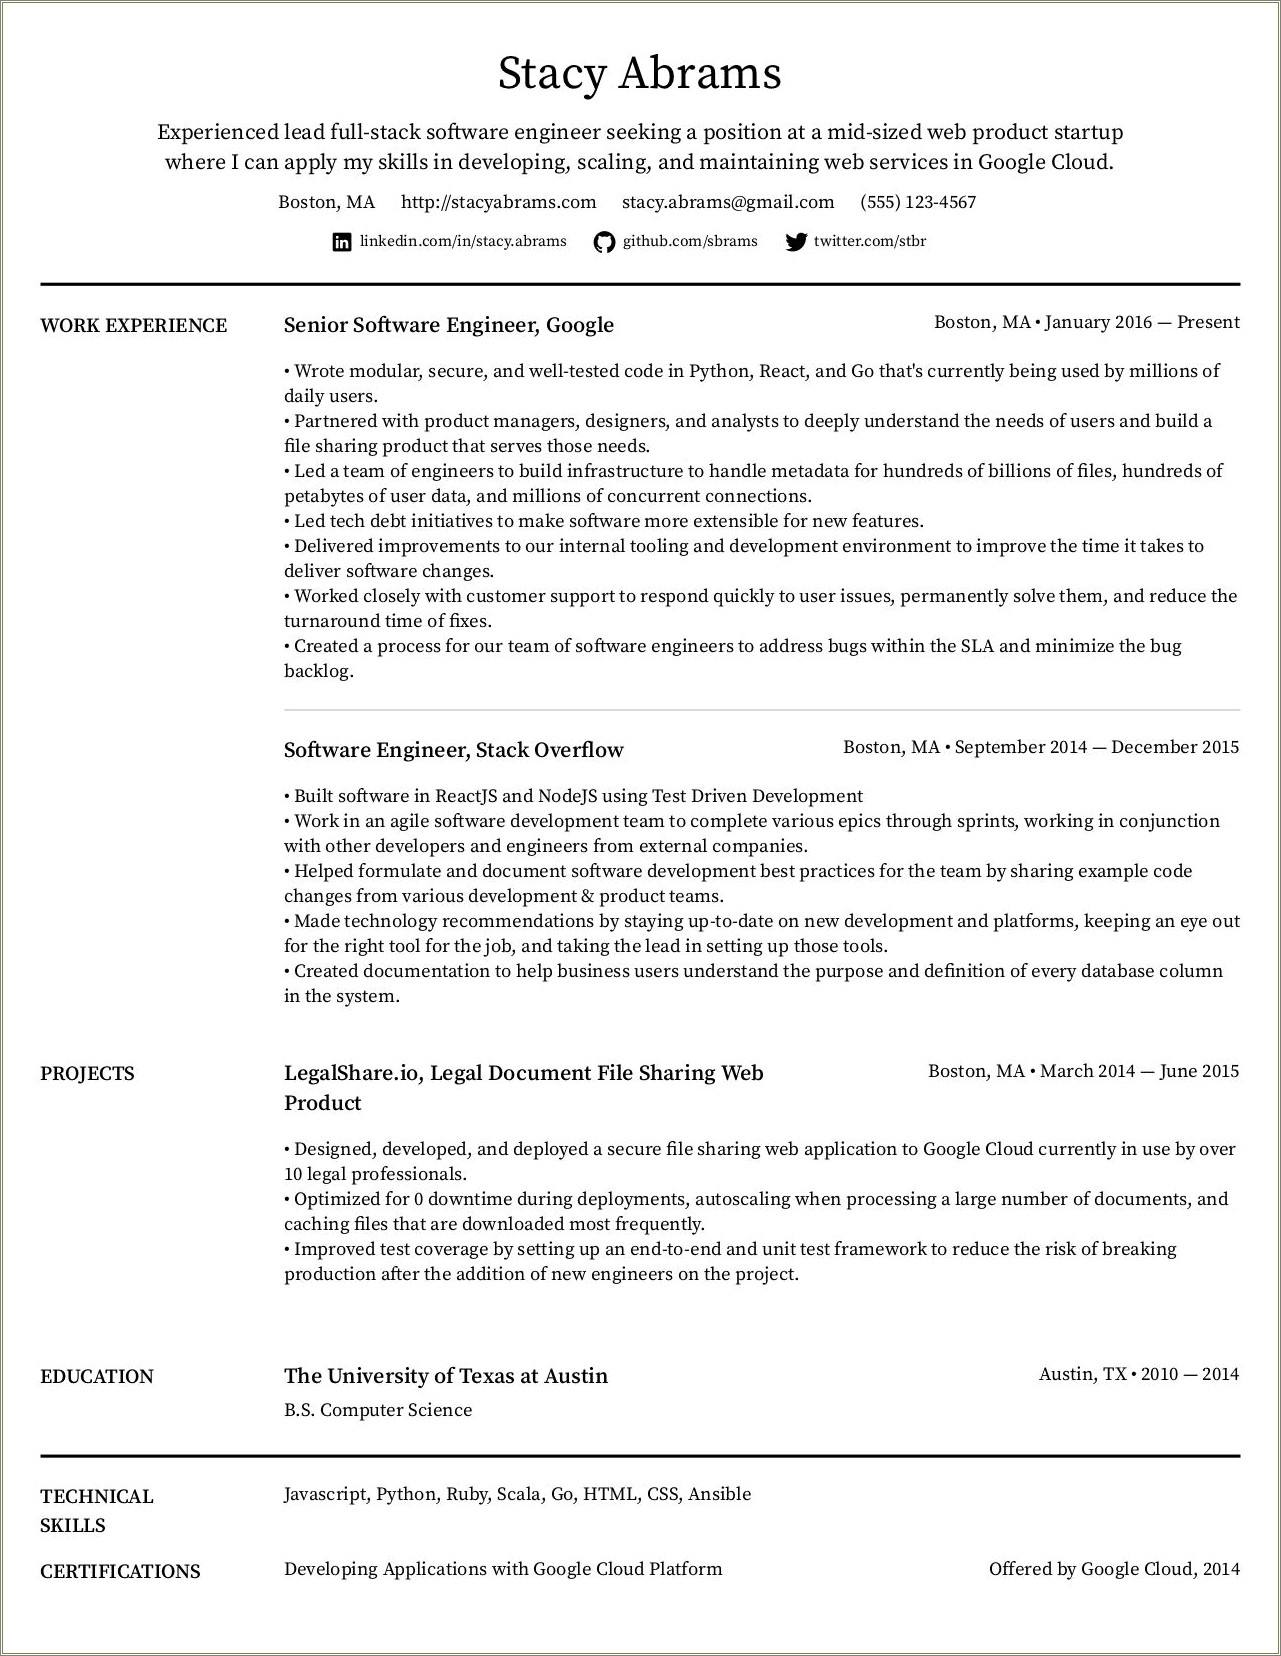 Bank Atm Spelists Job Description For Resume